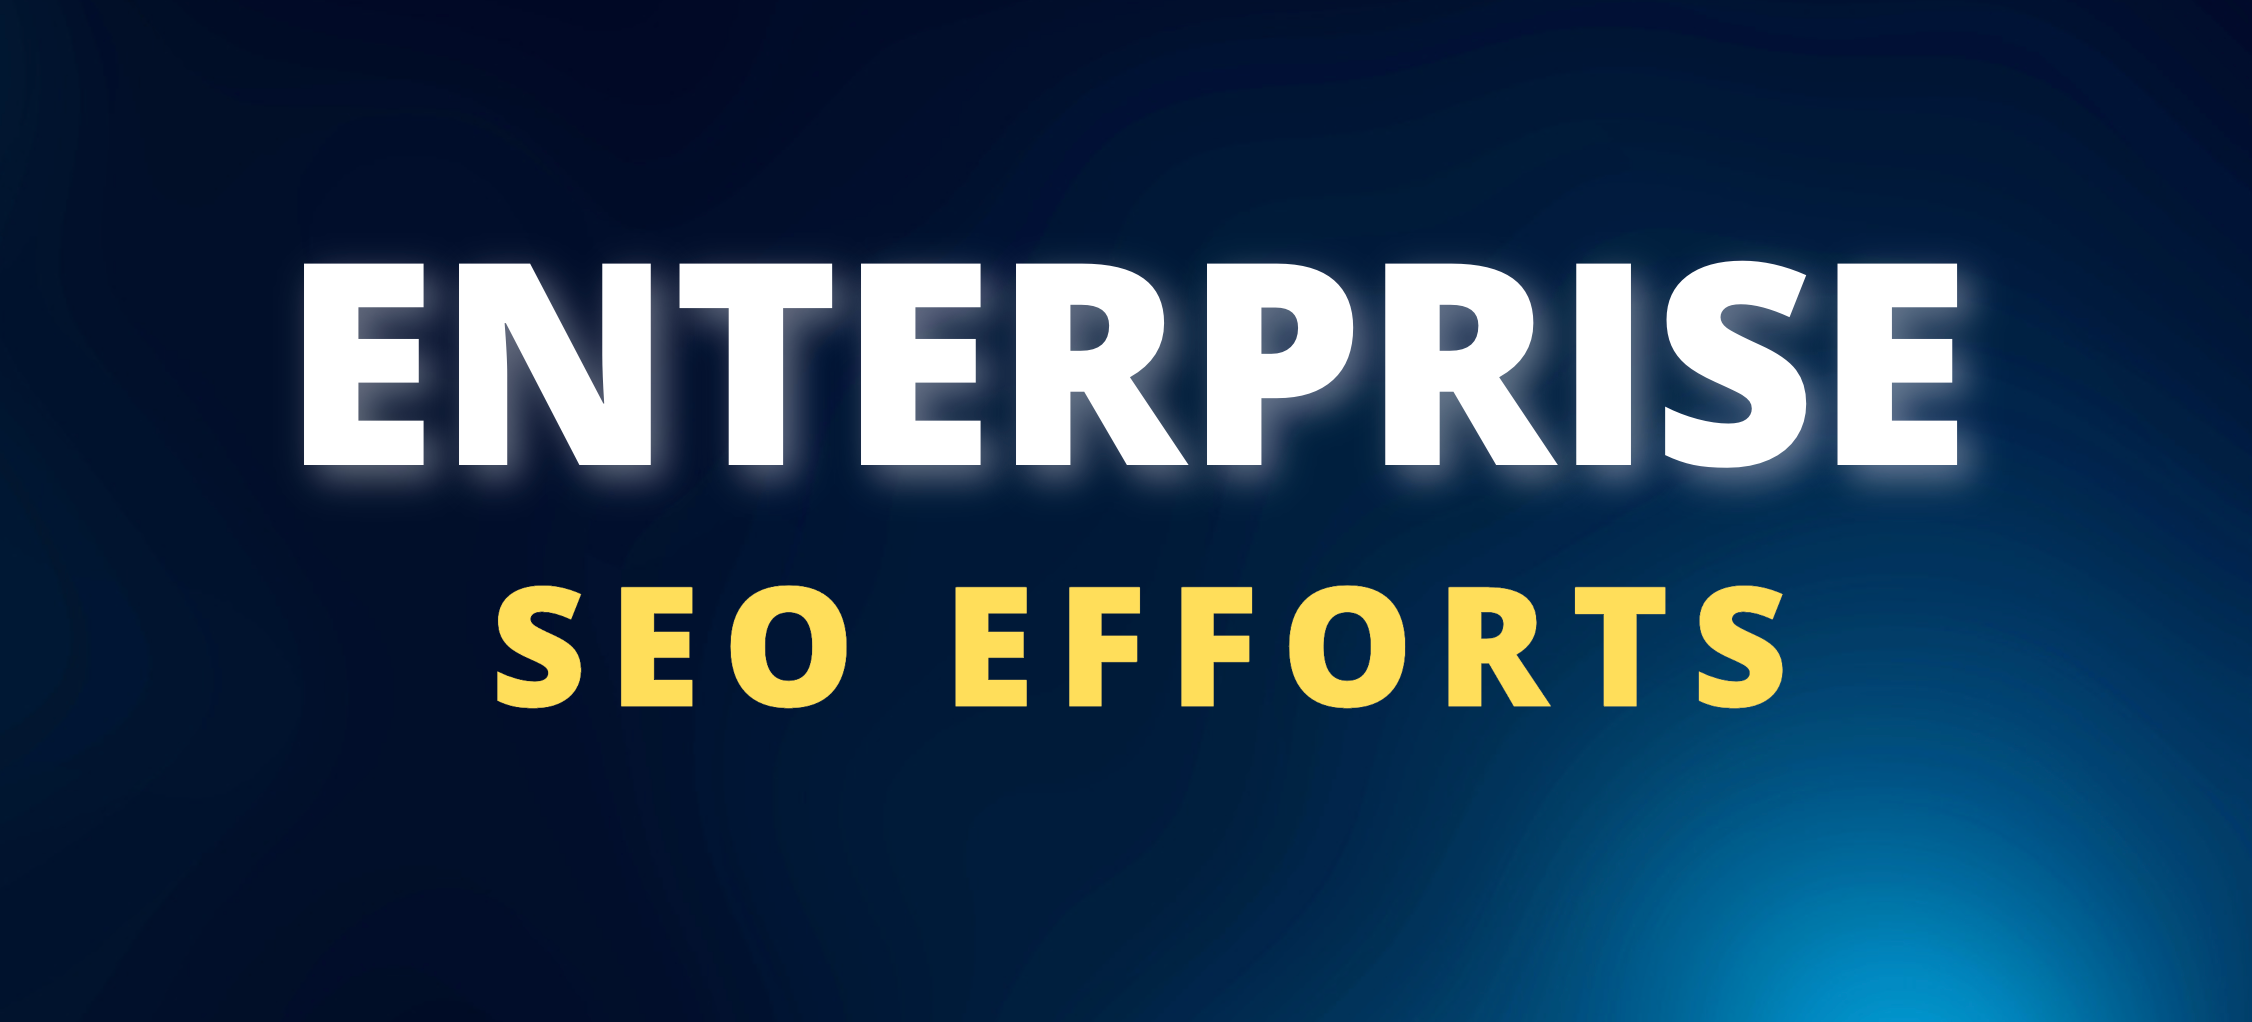 Enterprise SEO Efforts